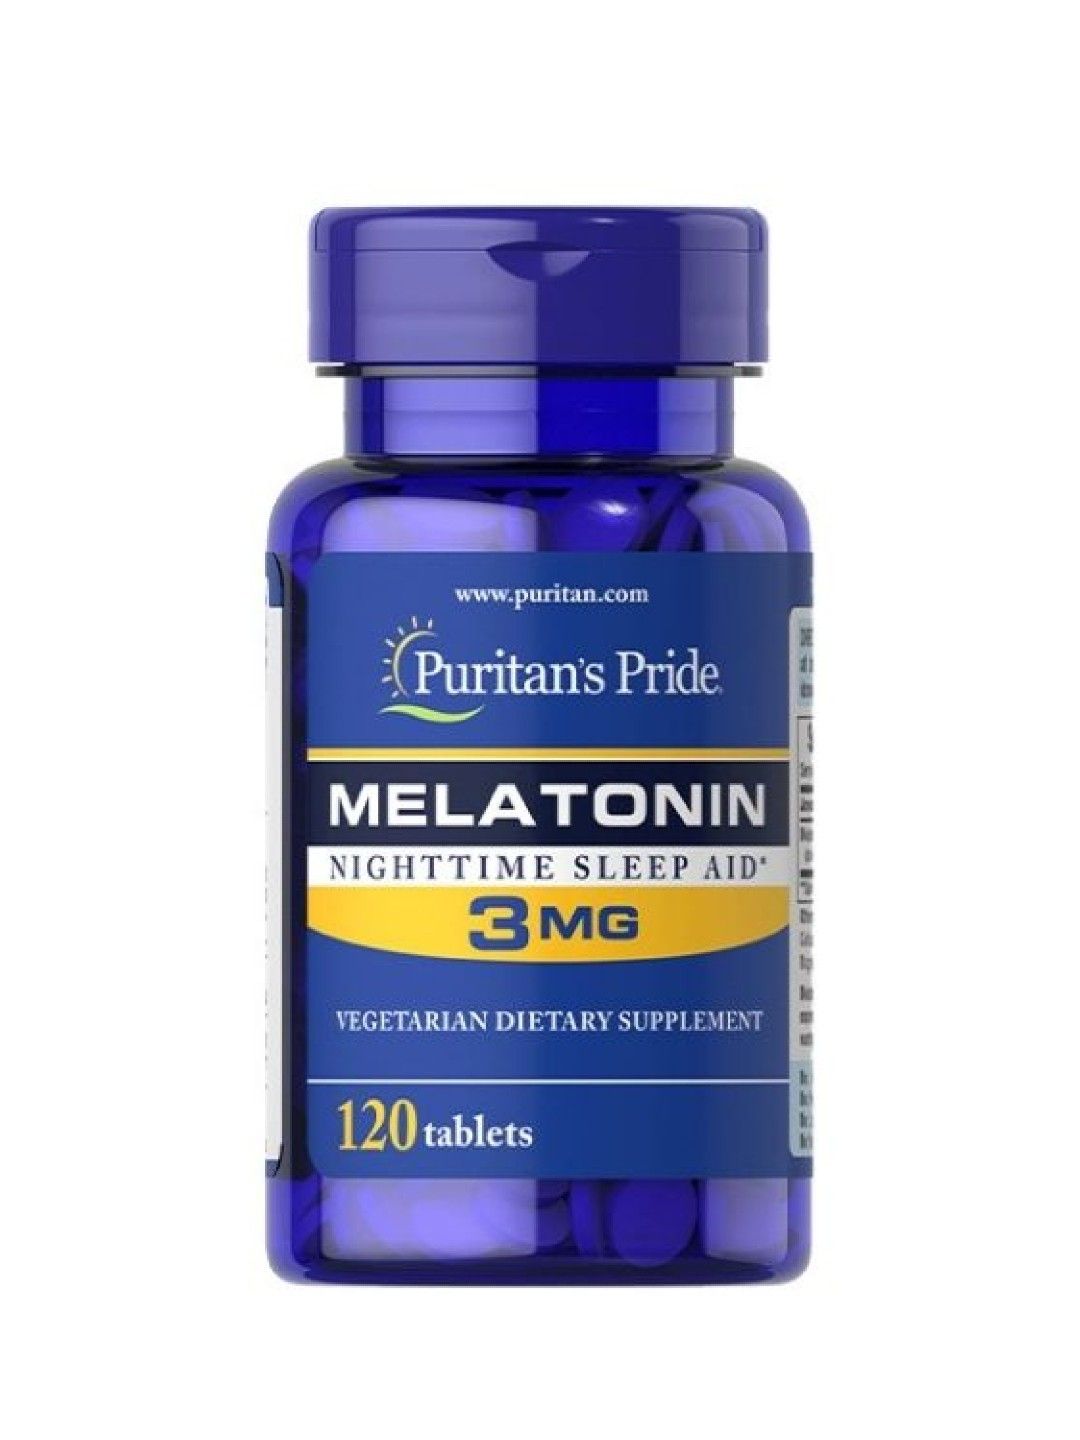 Puritan's Pride Melatonin 3 mg (120 tablets)